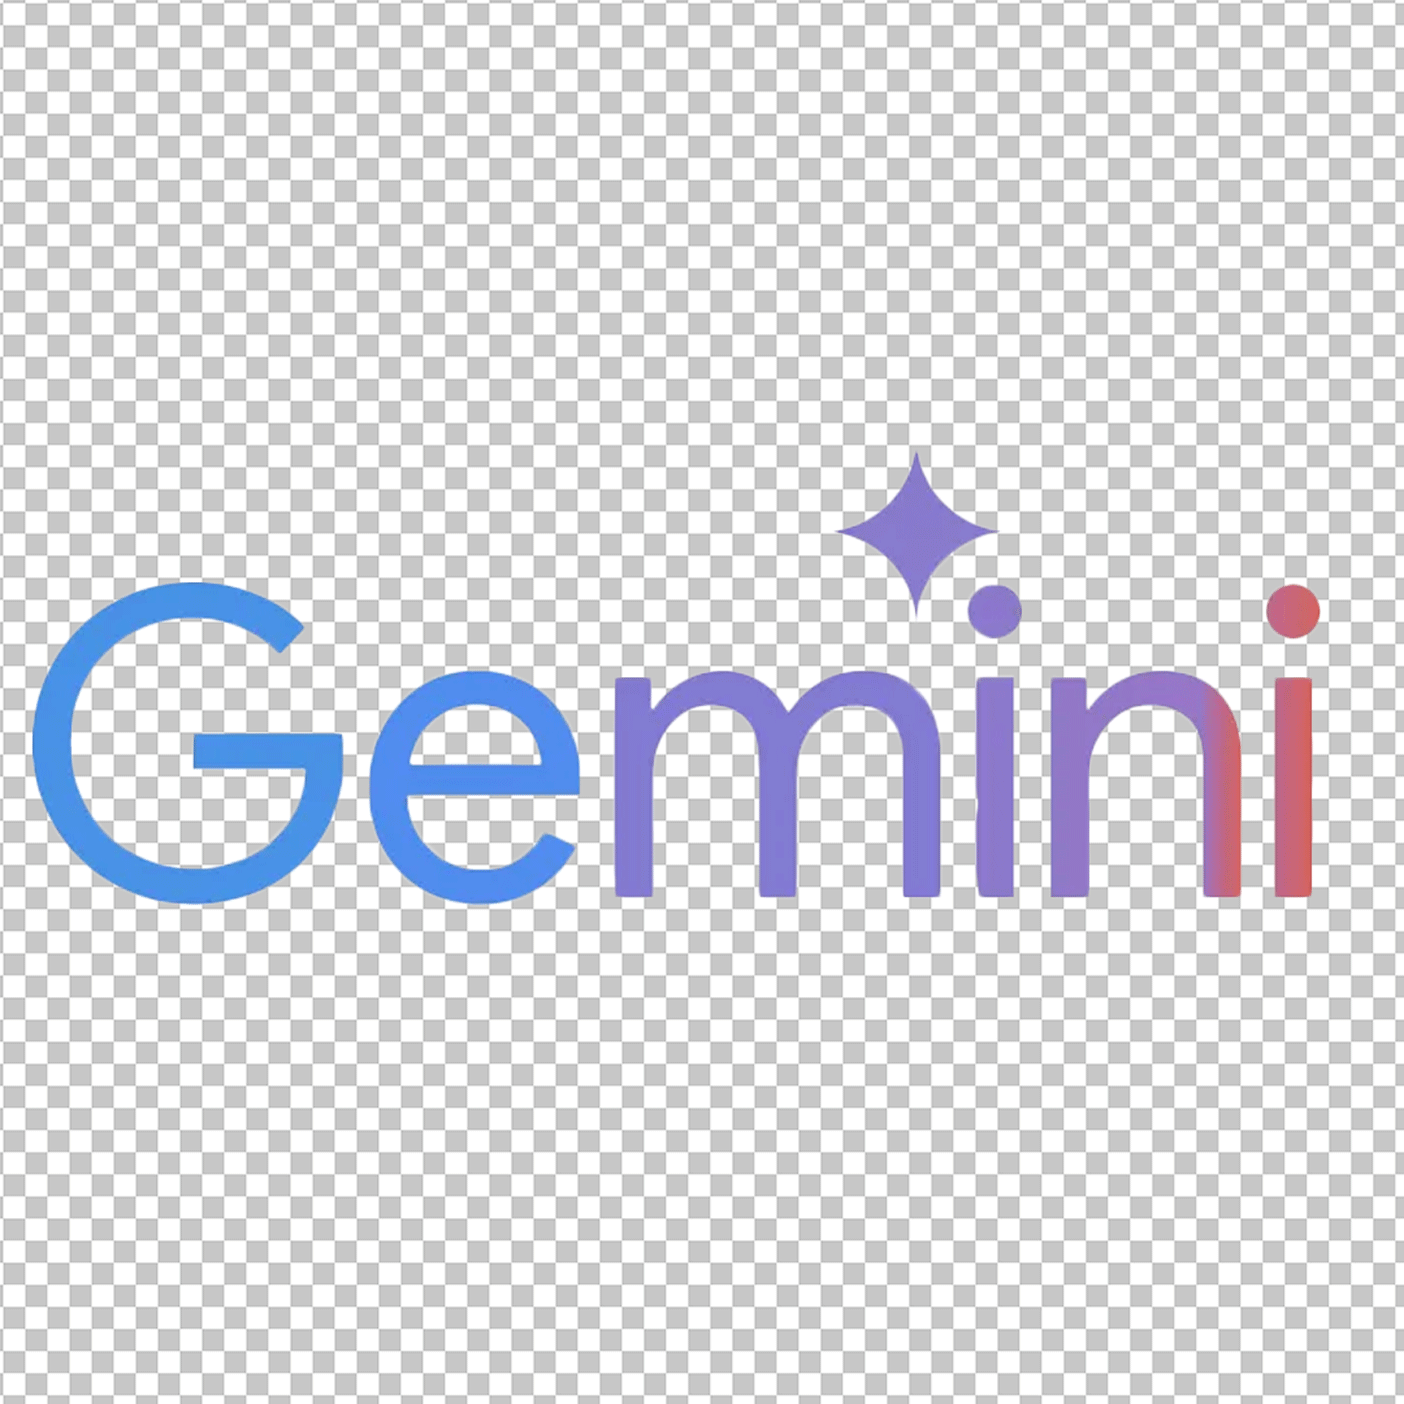 gemini ai logo png image